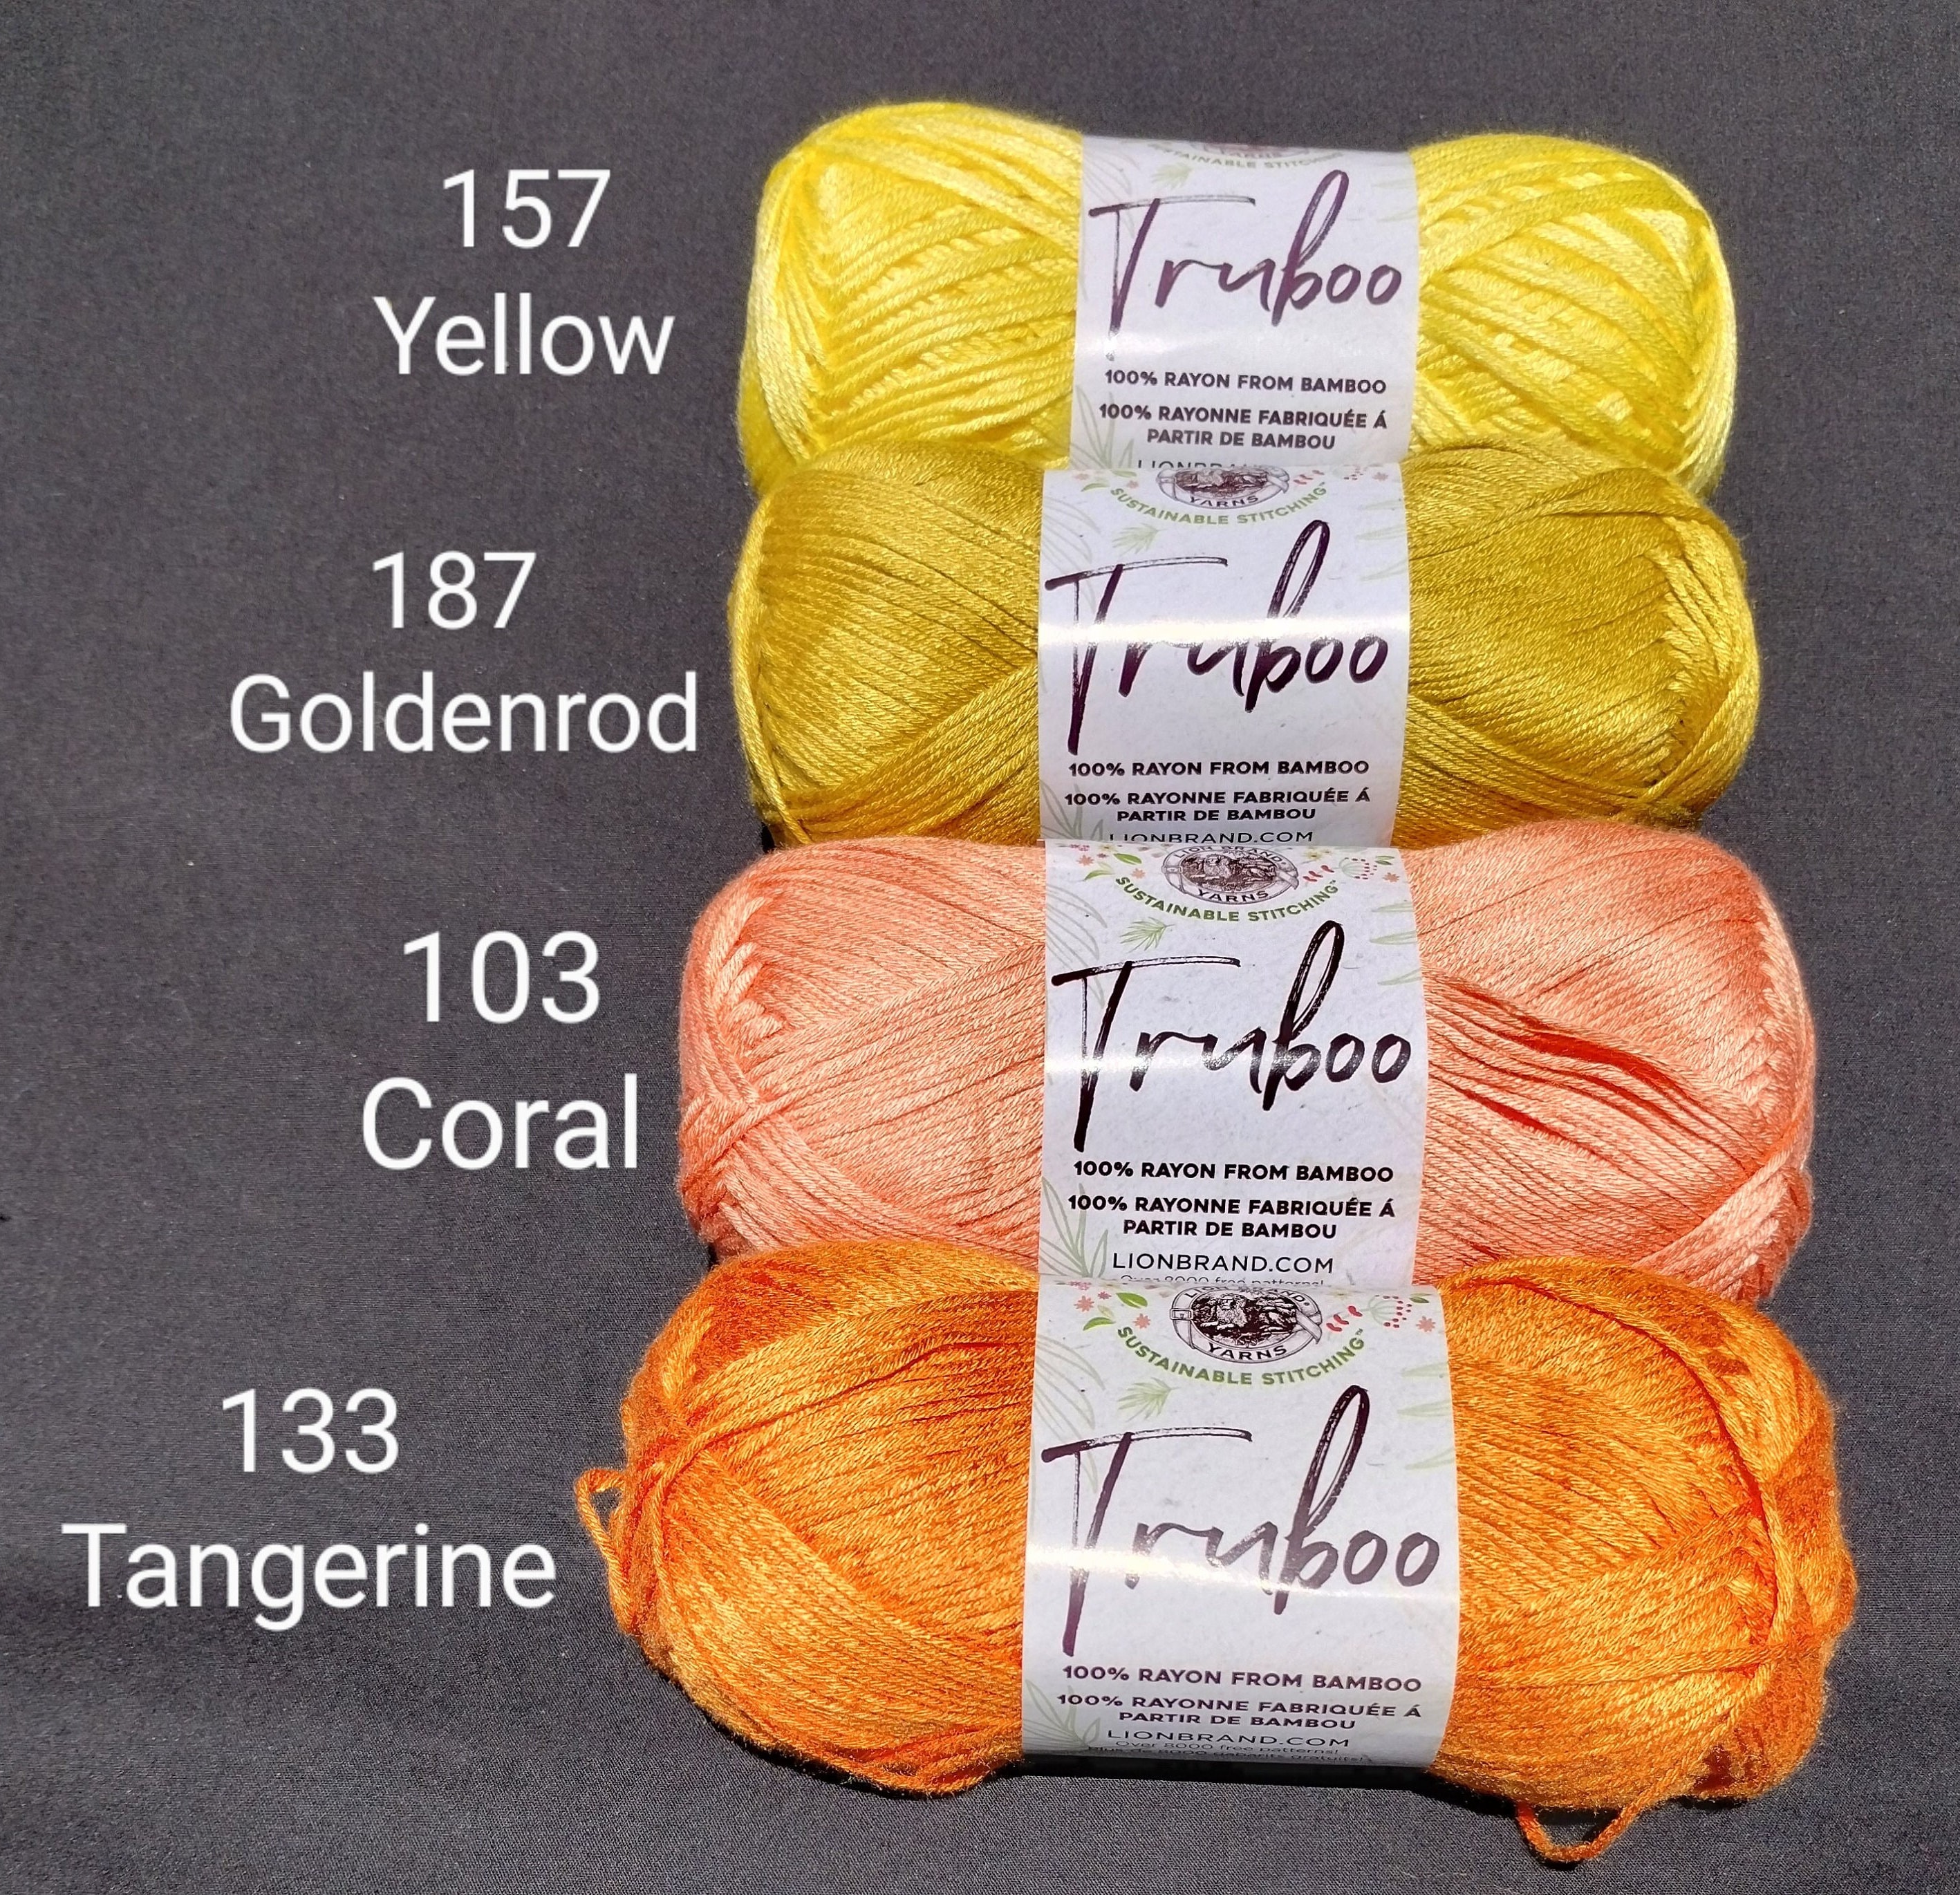  Lion Brand Knitting Yarn Truboo Light Pink 3-Skein Factory Pack  (Same Dye Lot) 837 101 Bundle with 1 Artsiga Crafts Project Bag